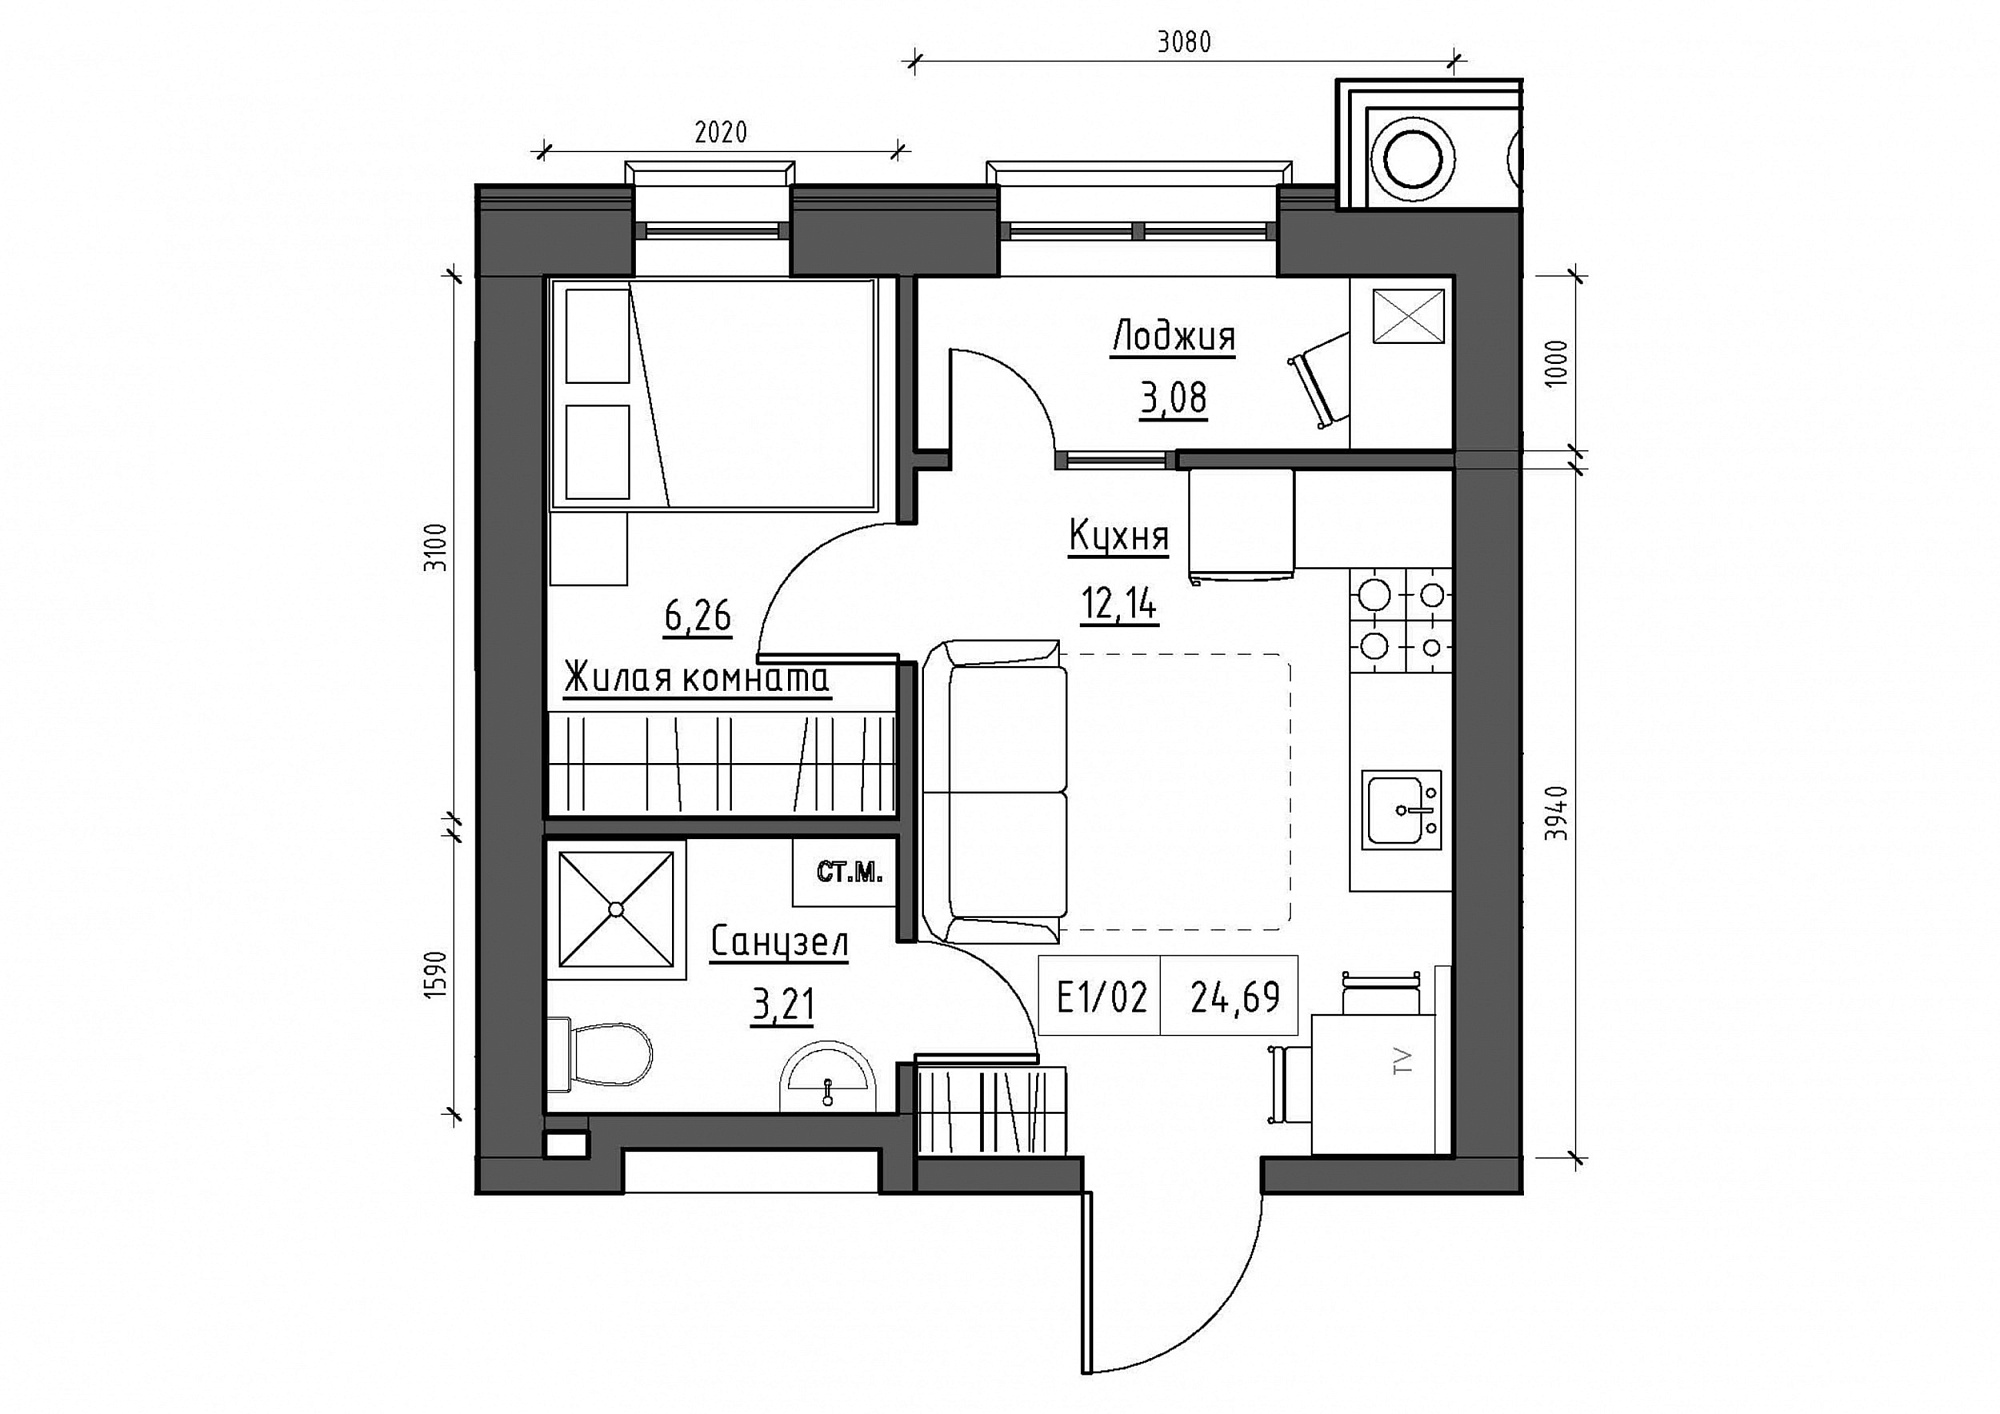 Planning 1-rm flats area 24.69m2, KS-011-05/0017.